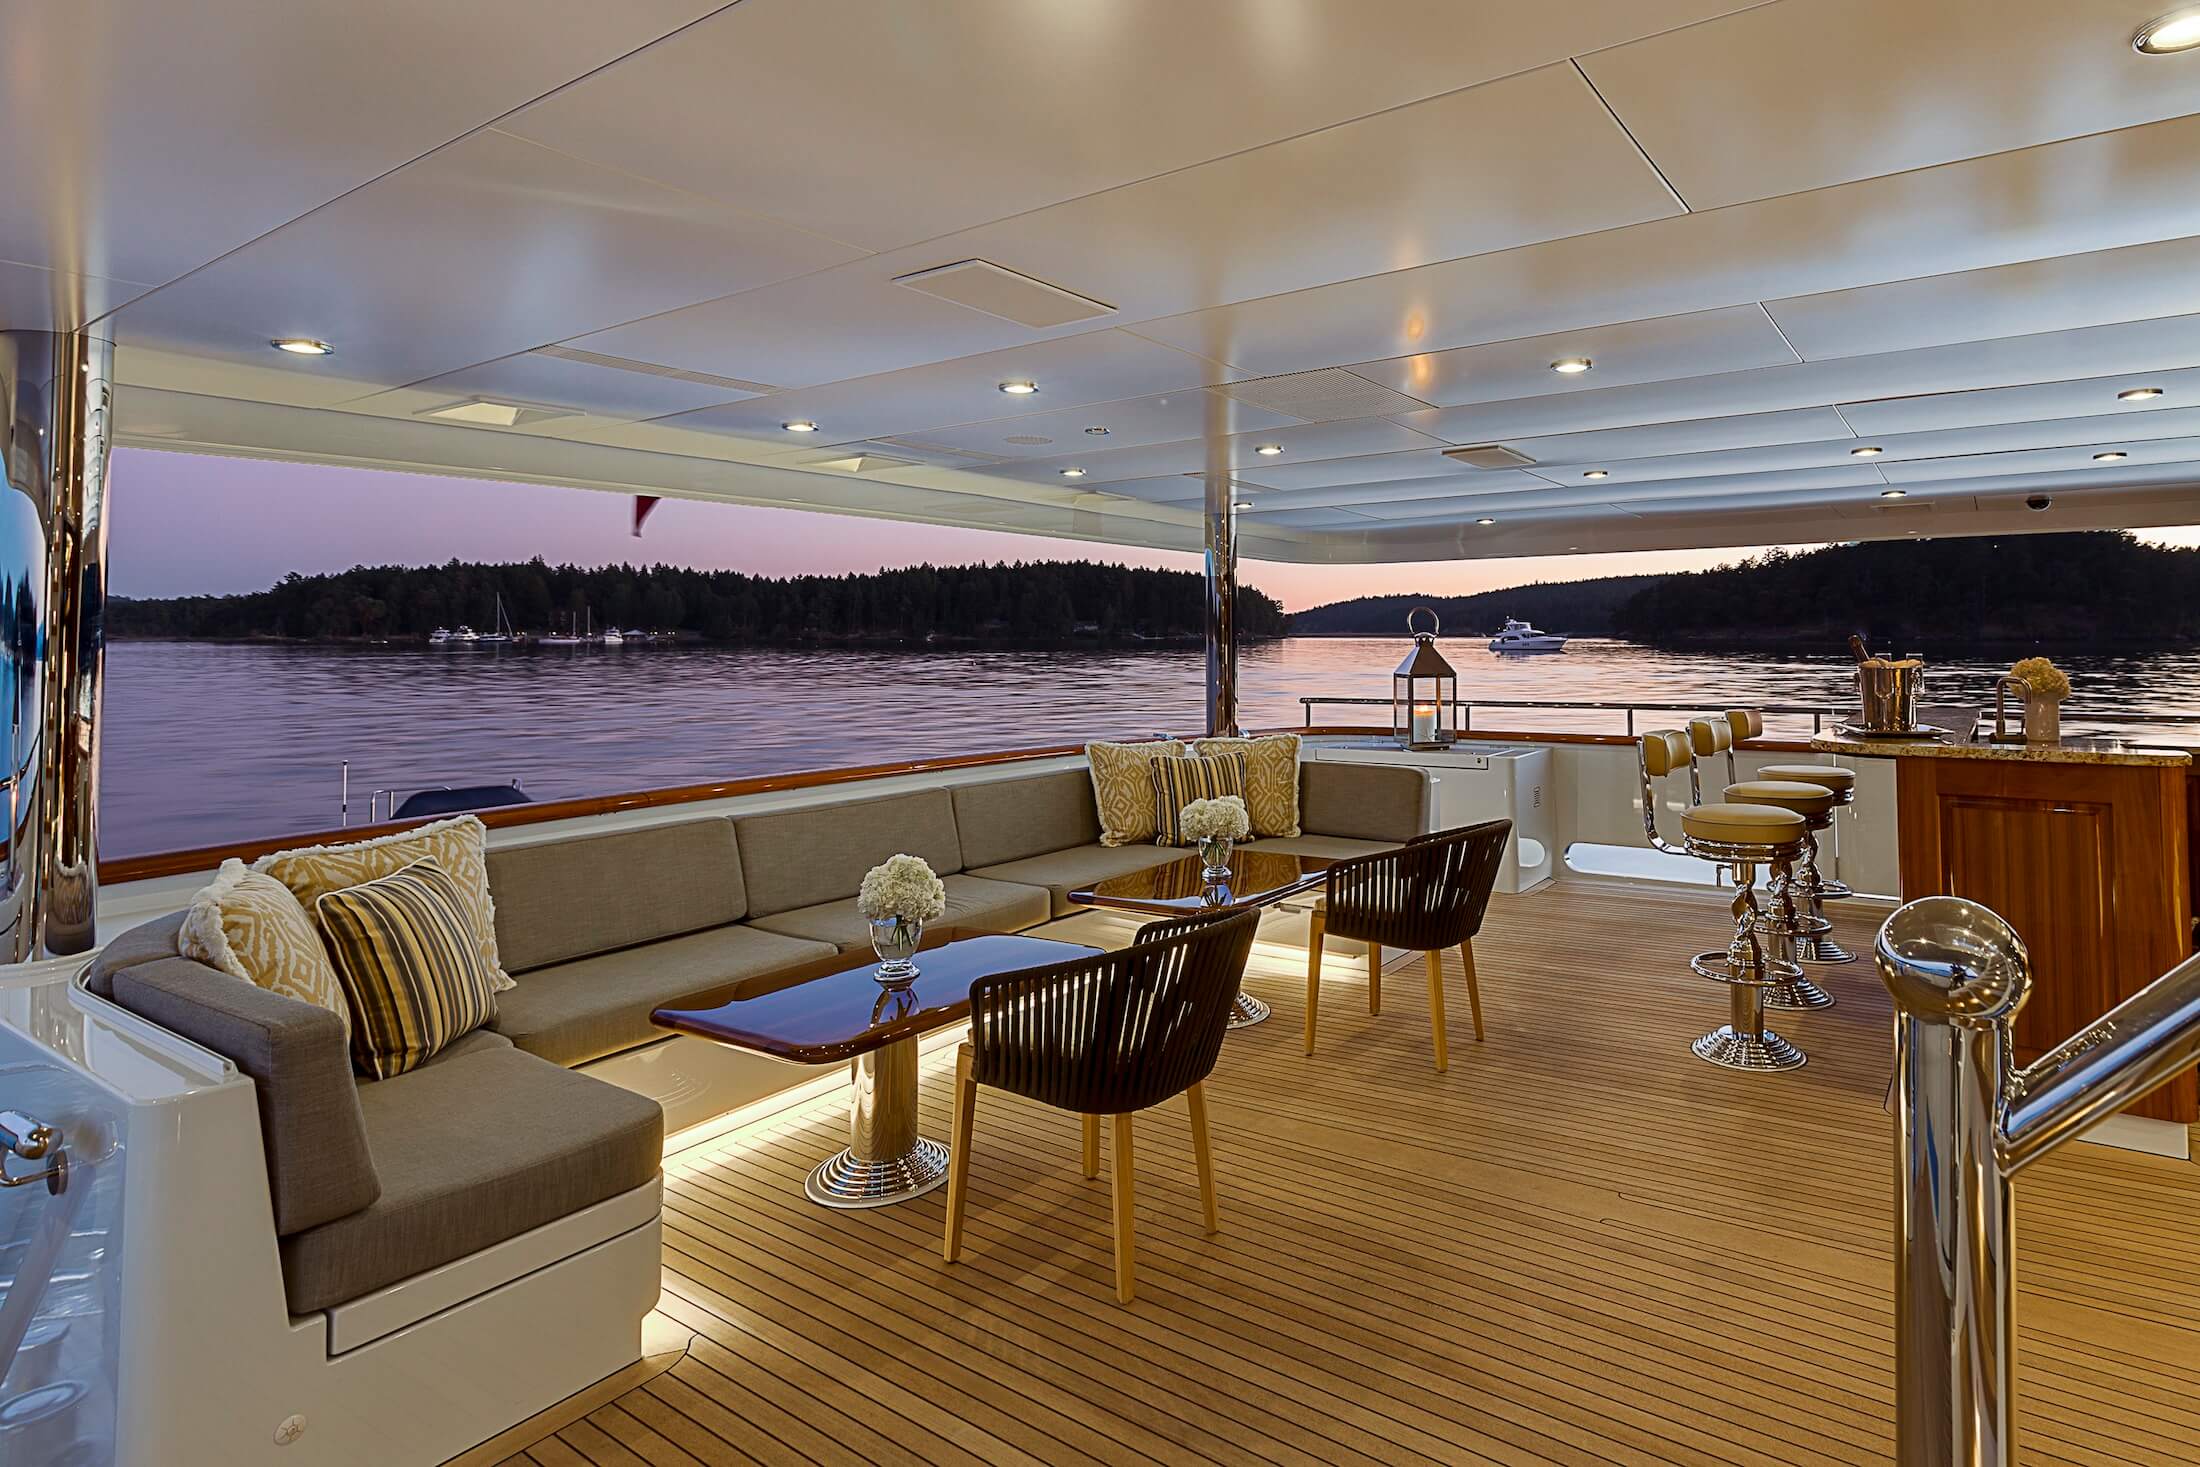 D'Natalin Luxury Yacht exterior seating area